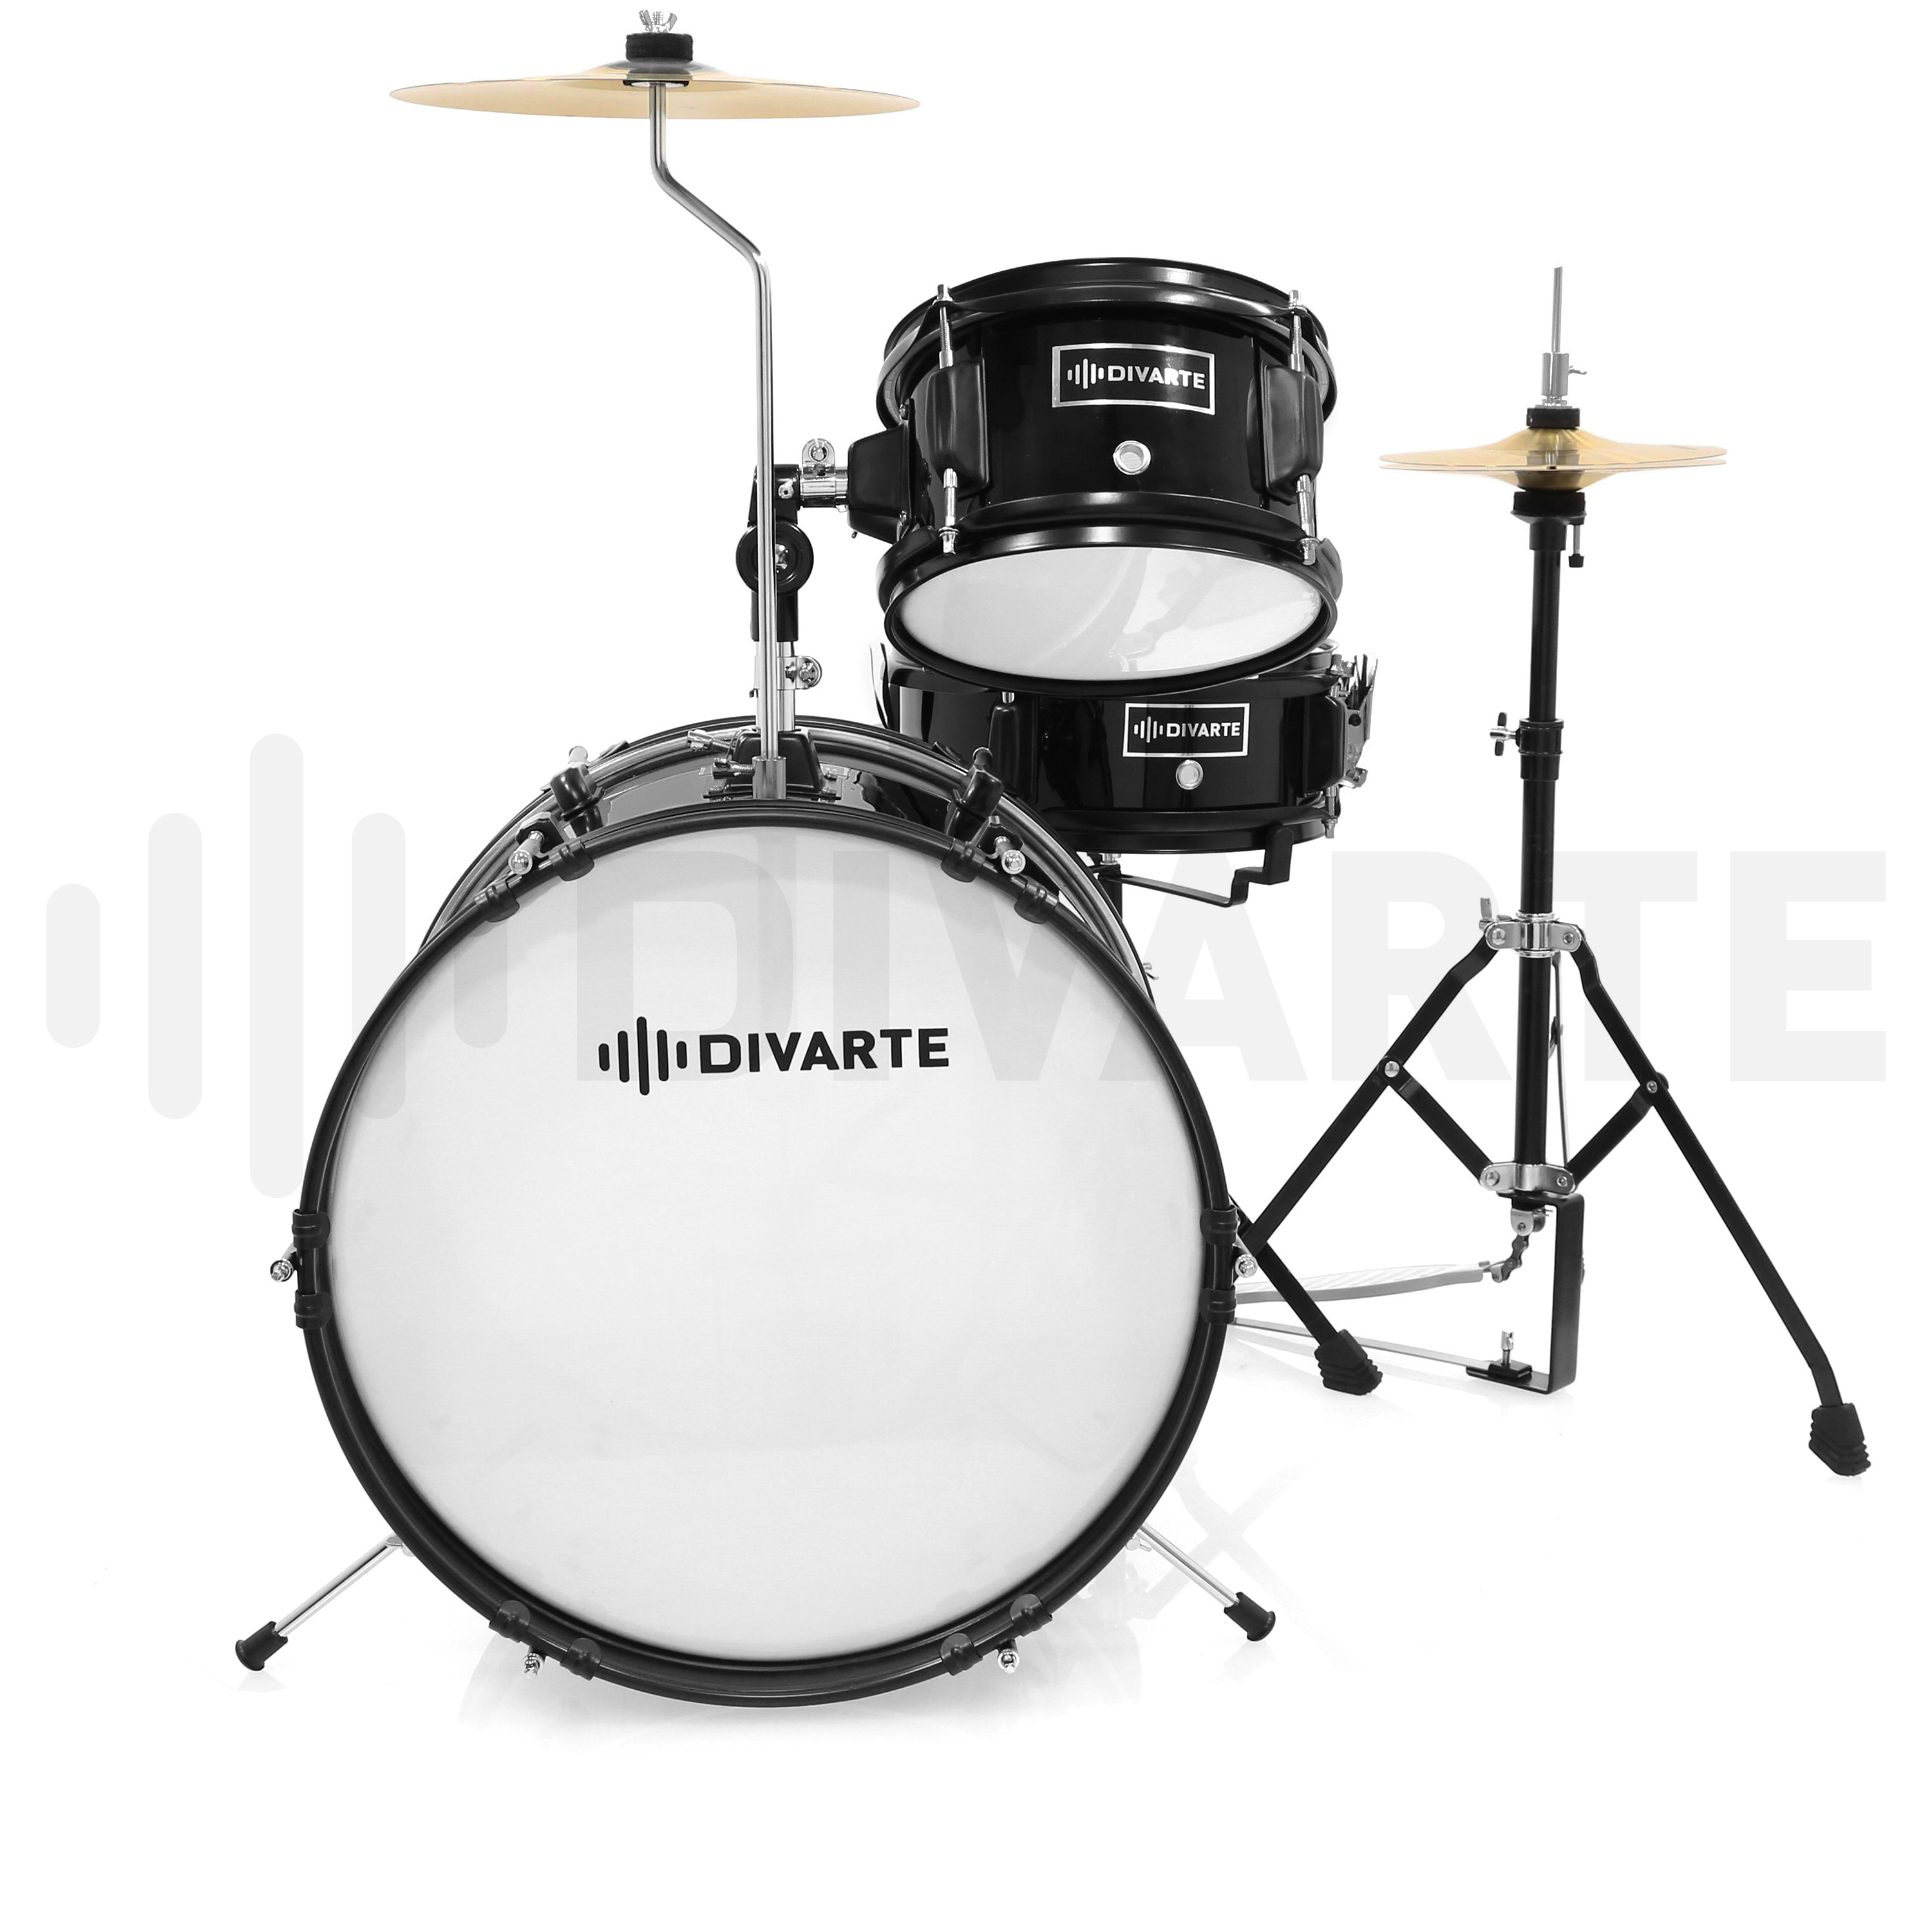 Junior DrumSet BK Divarte